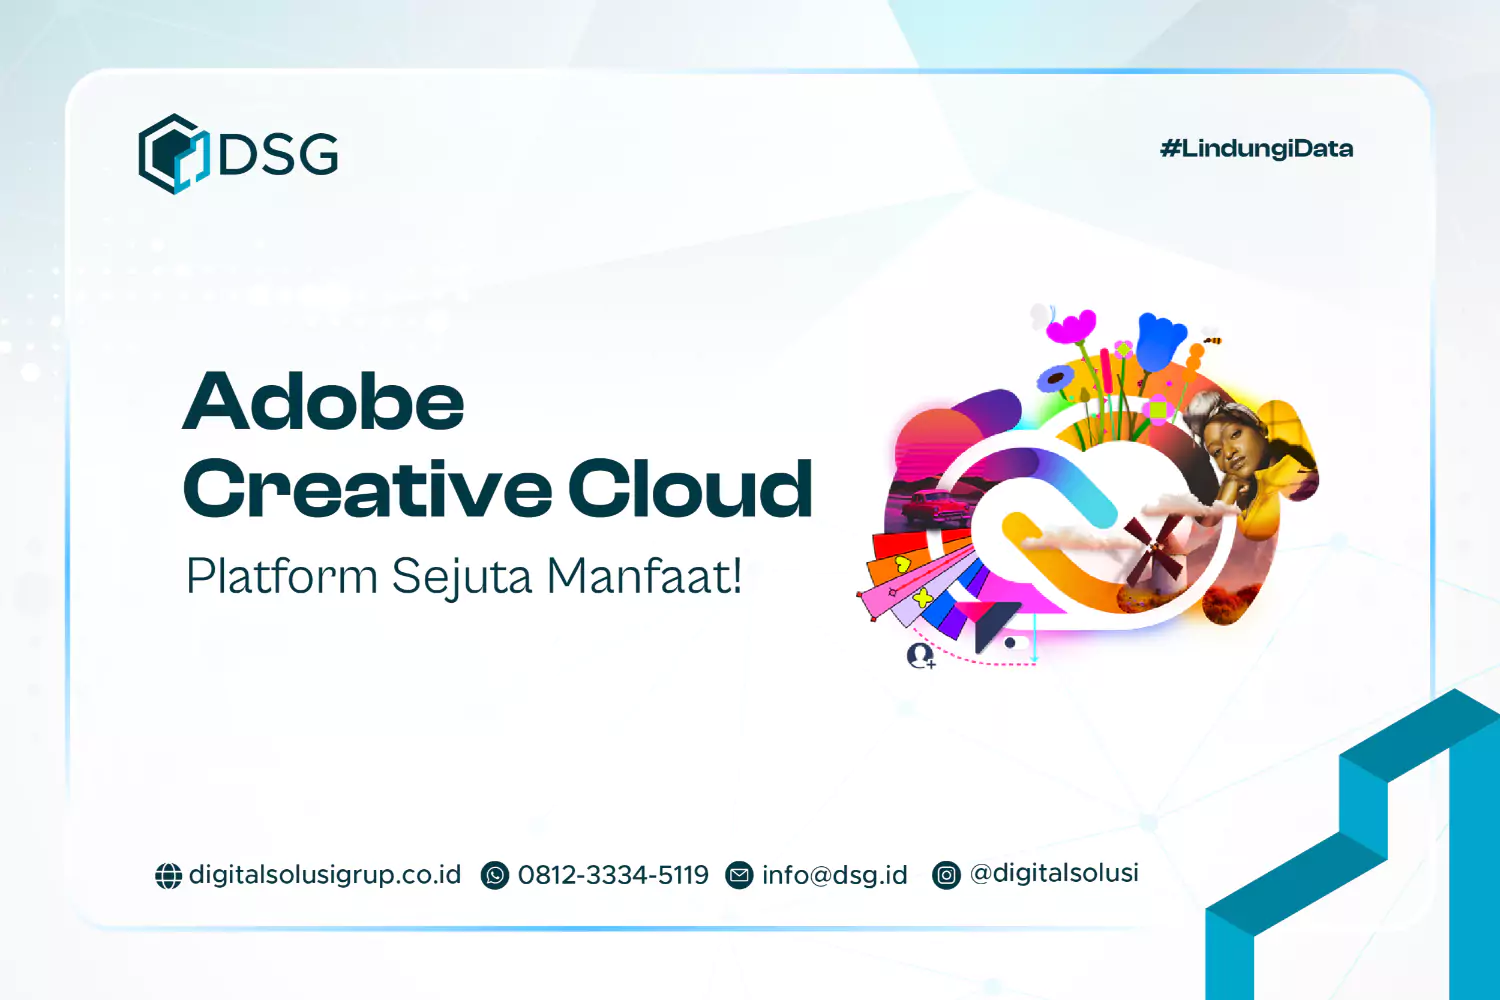 Adobe Creative Cloud, Platform Sejuta Manfaat!